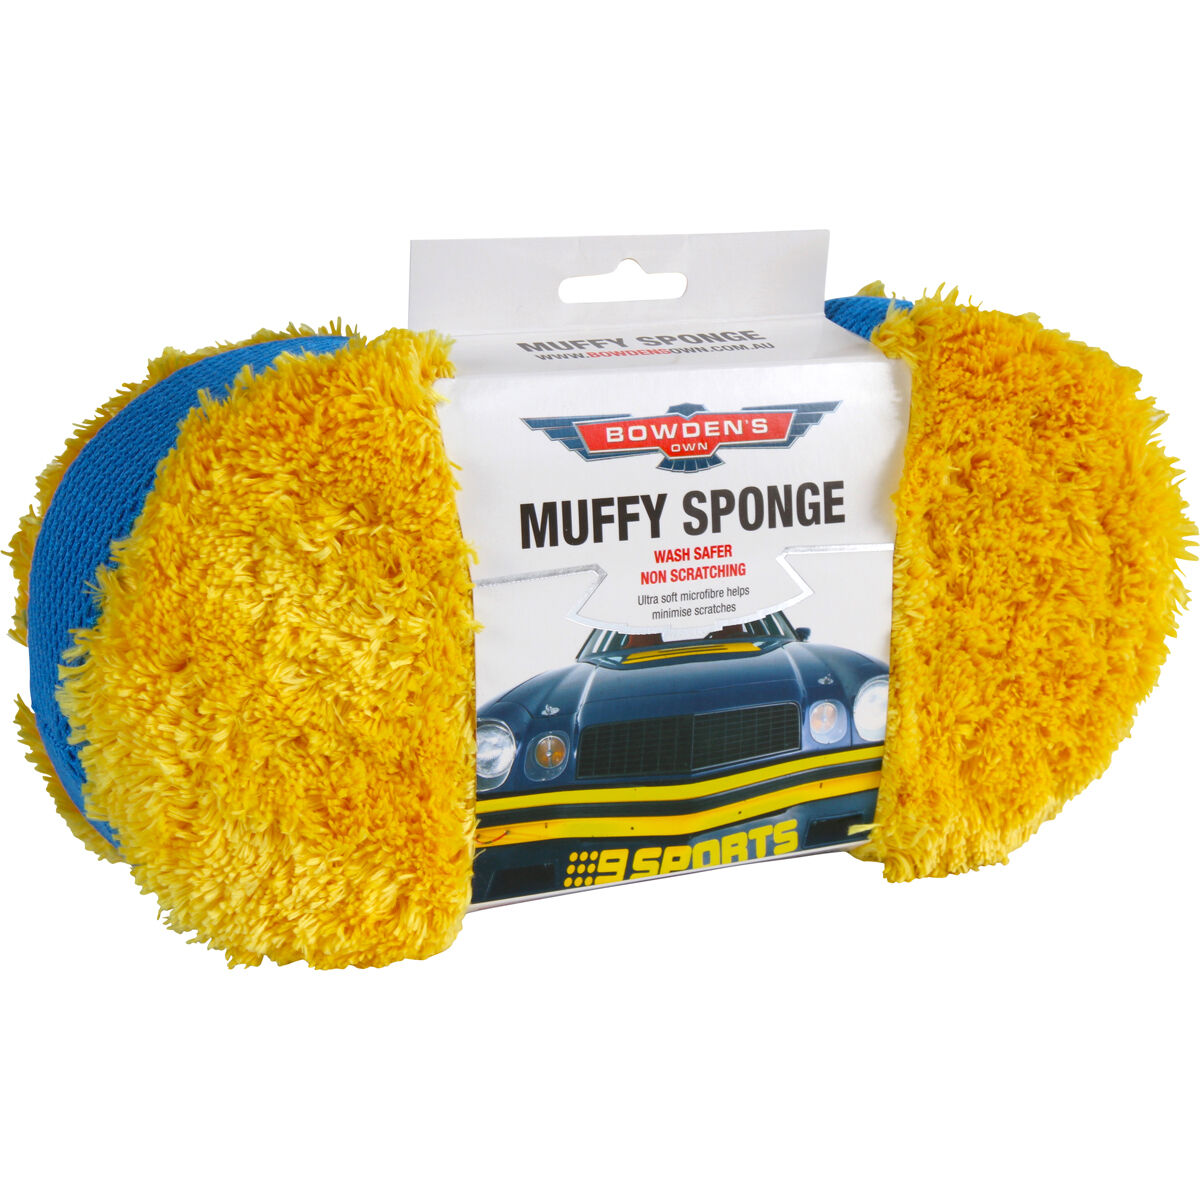 Bowden's Own Muffy Sponge Supercheap Auto